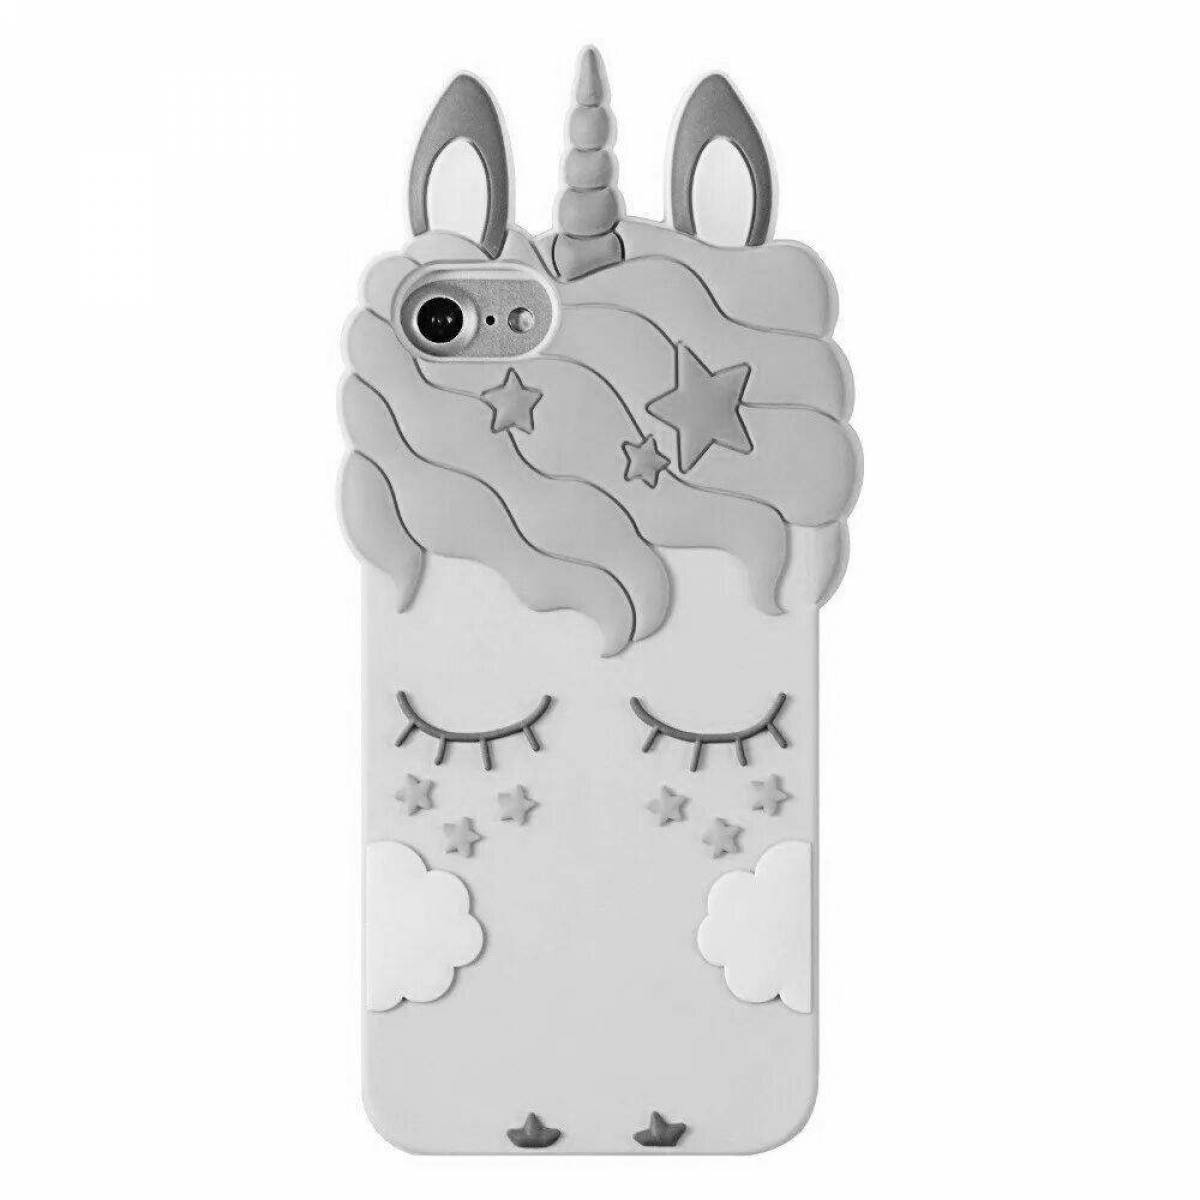 Fairy coloring unicorn phone